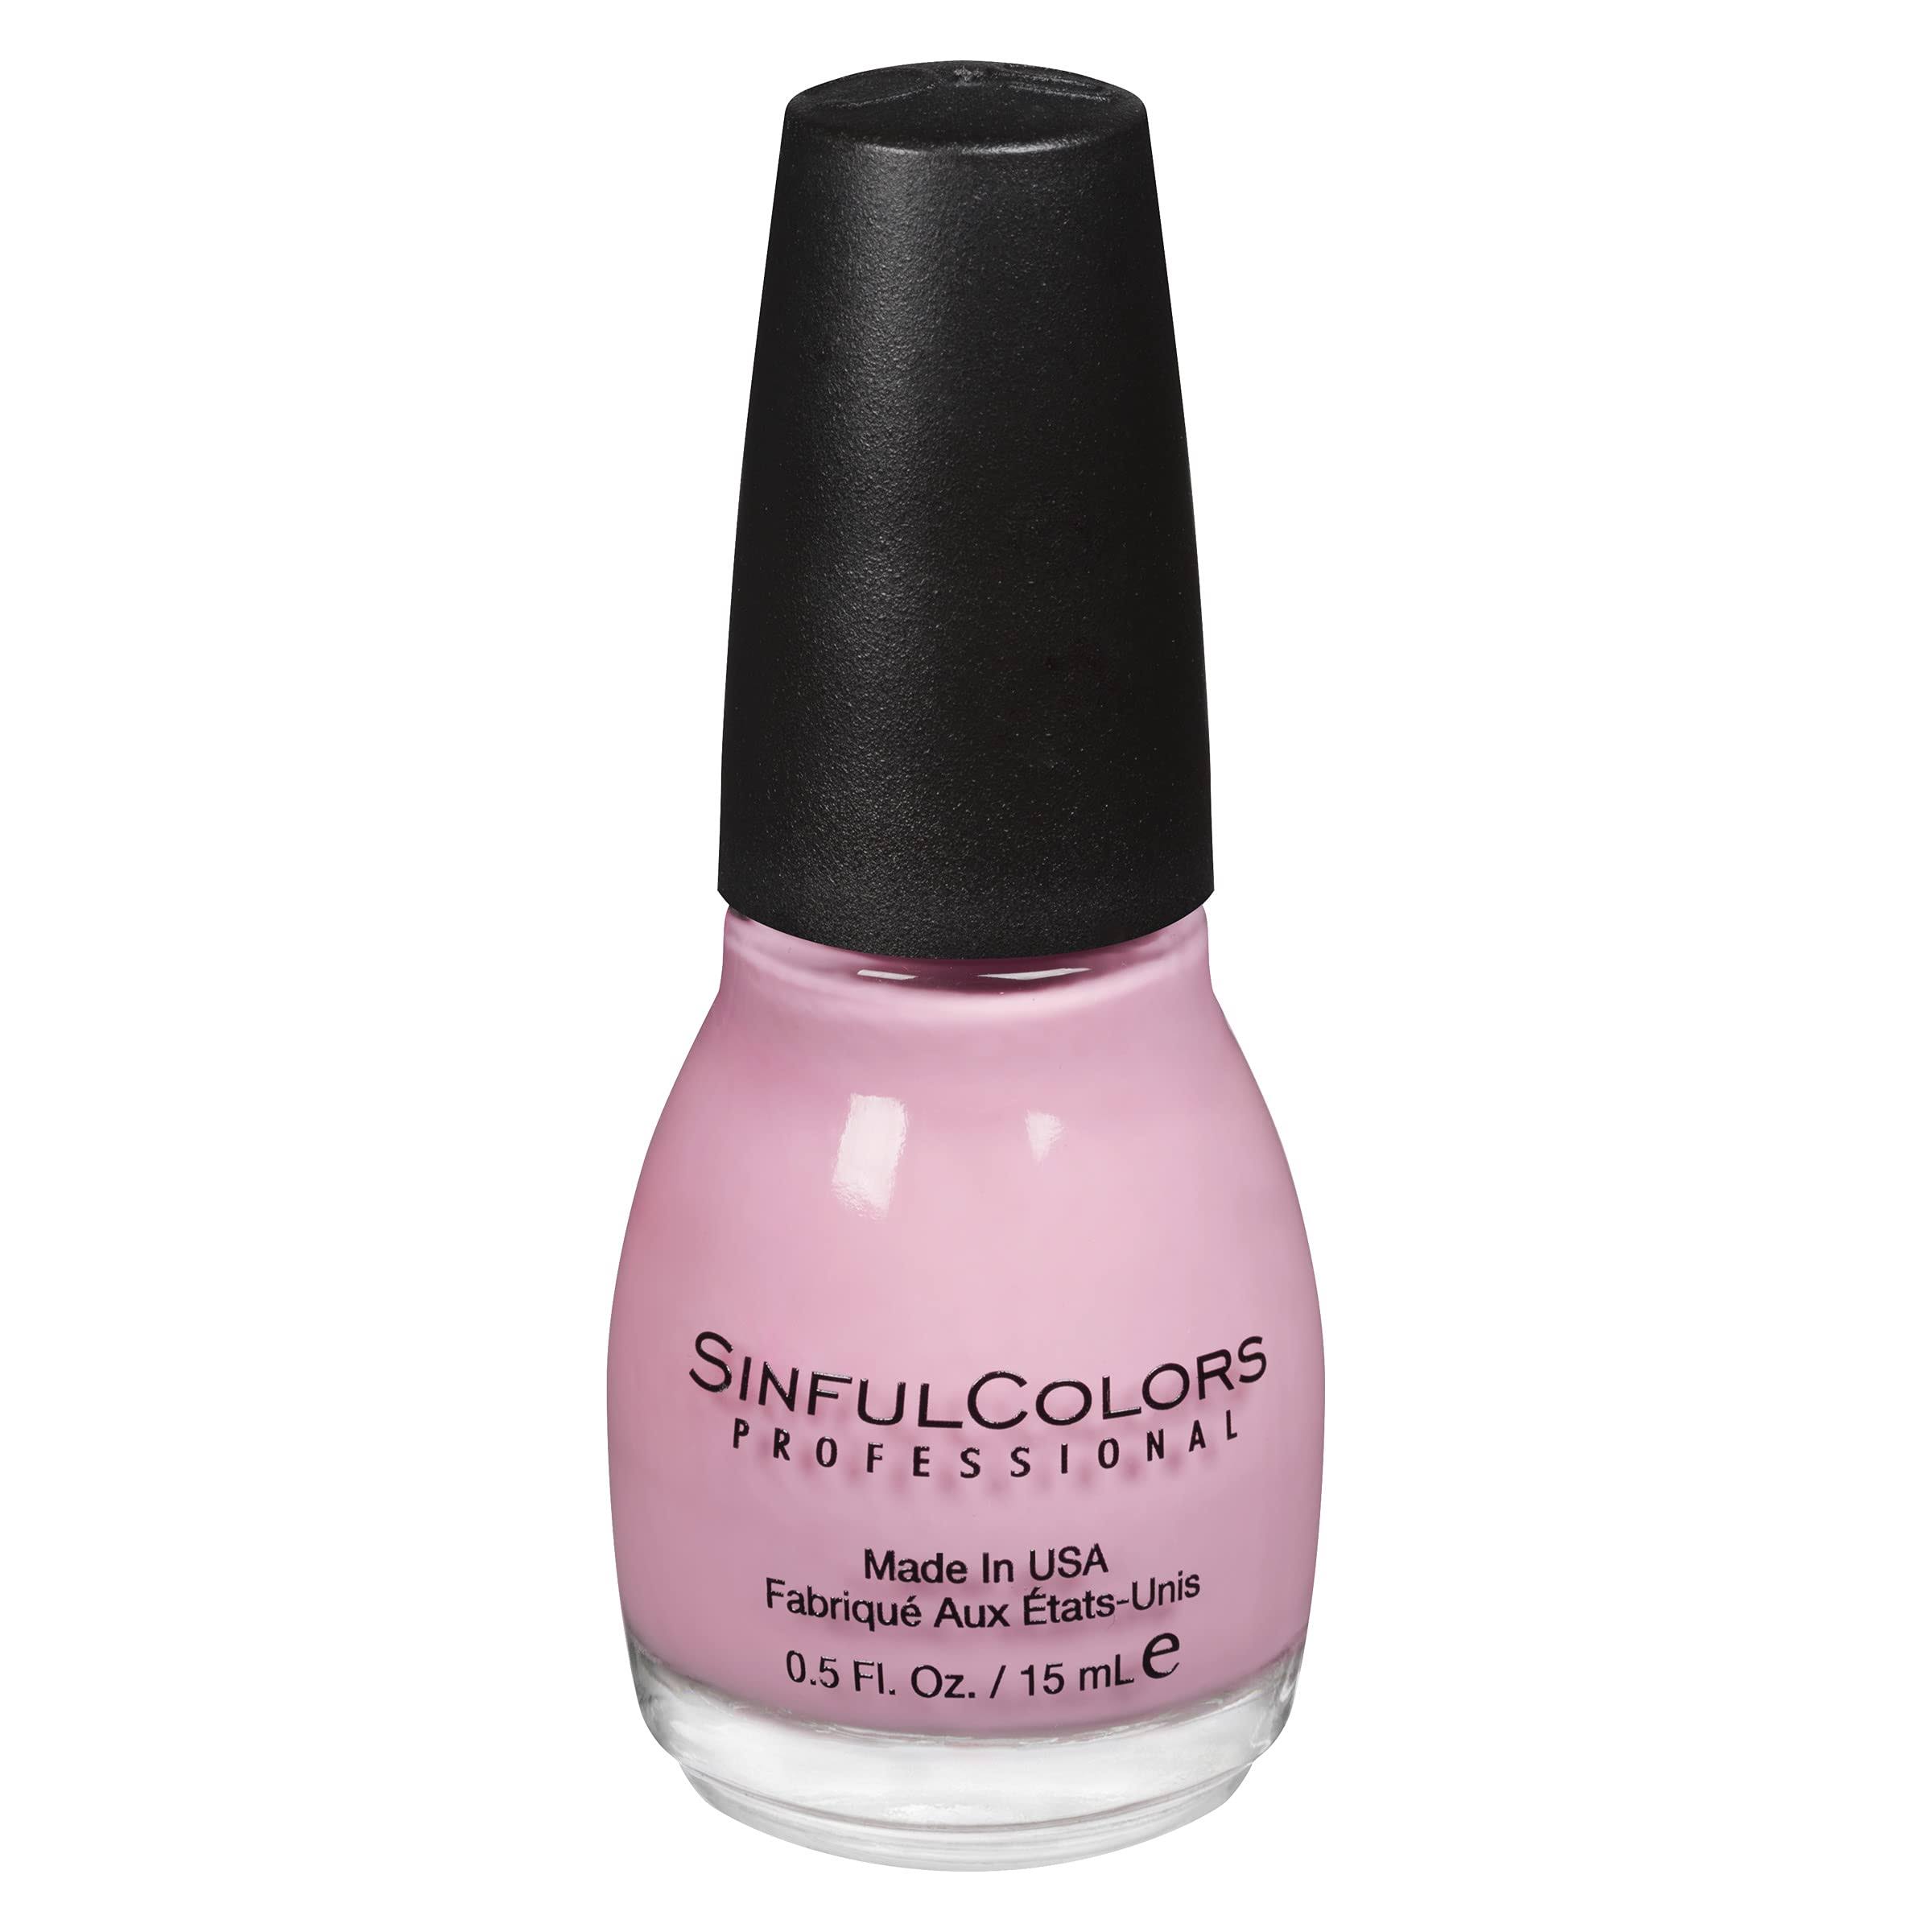 Sinful Colors Professional Nail Polish - #1506 Pink Smart, 0.5oz